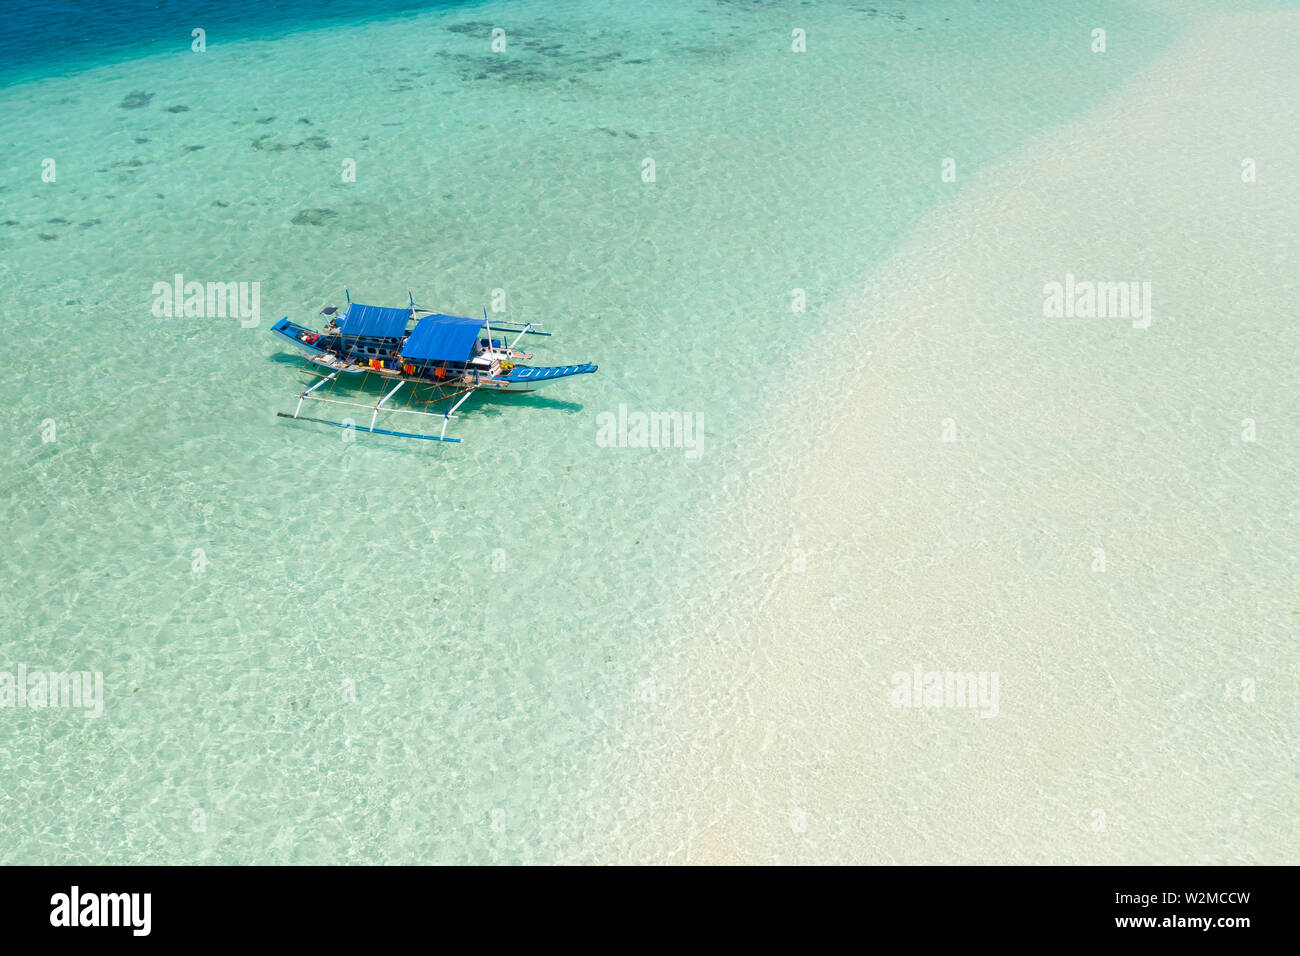 Mansalangan sandbar, Balabac, PALAWAN FILIPPINE. Isole tropicali con le lagune turchesi, vista da sopra. Barca e turisti in acque poco profonde. Foto Stock